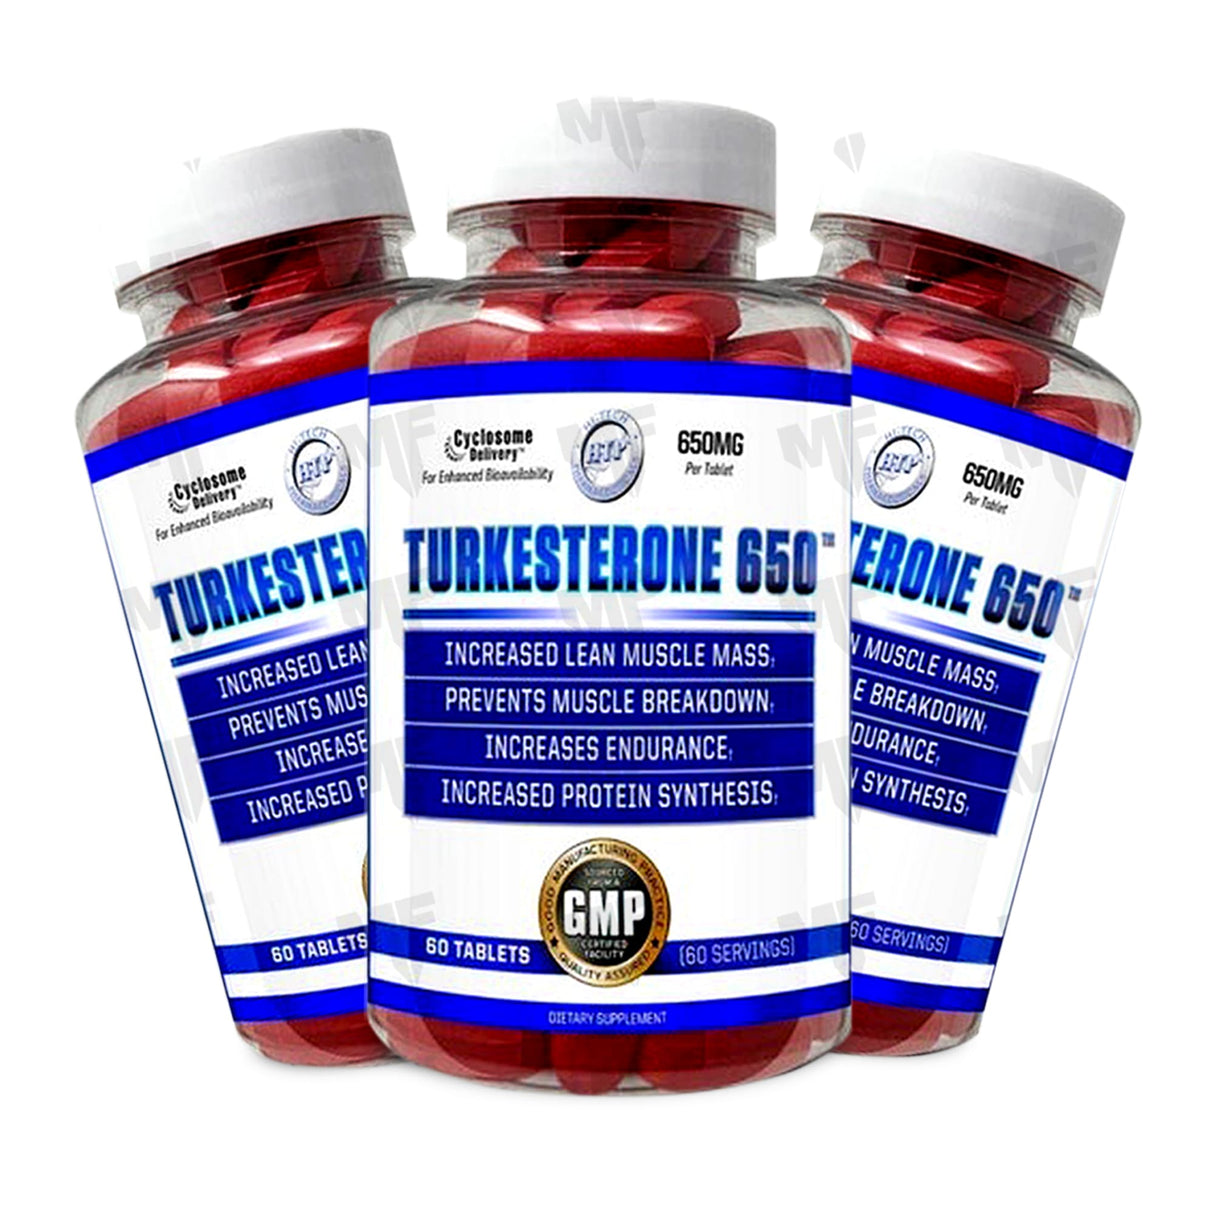 Turkesterone 650 by Hi Tech Pharmaceuticals - Muscle Factory, LLC